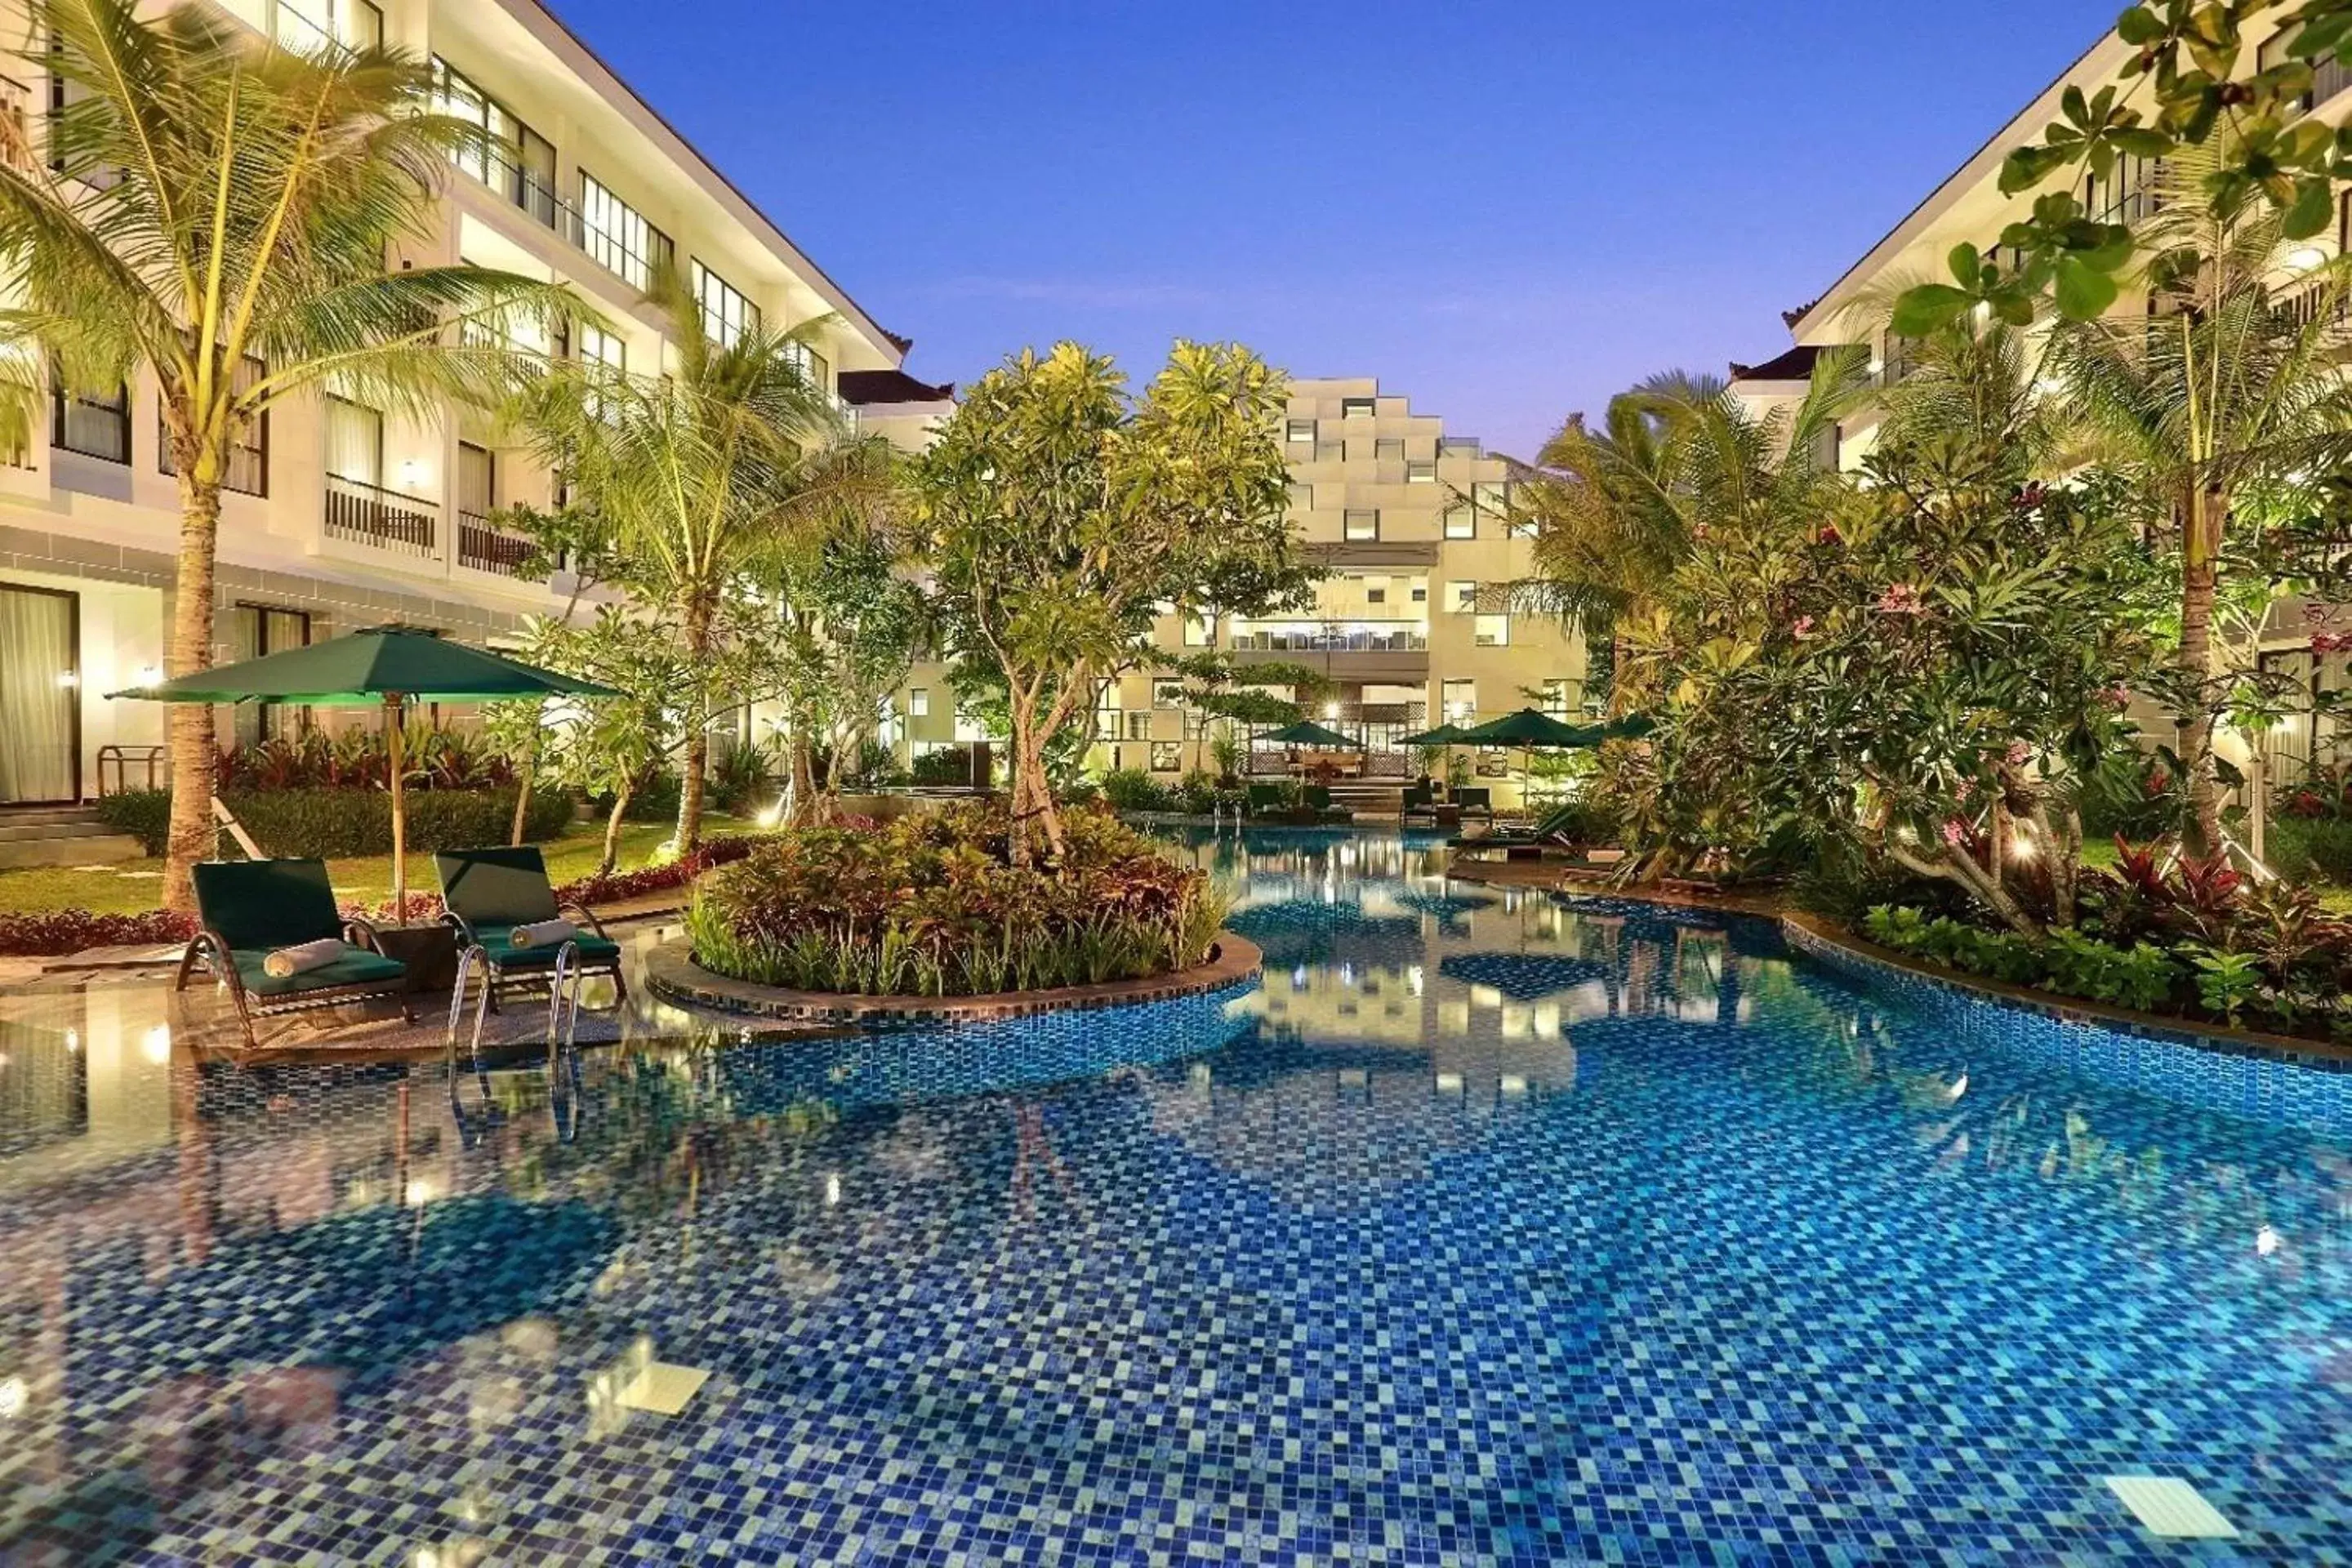 Swimming Pool in Bali Nusa Dua Hotel